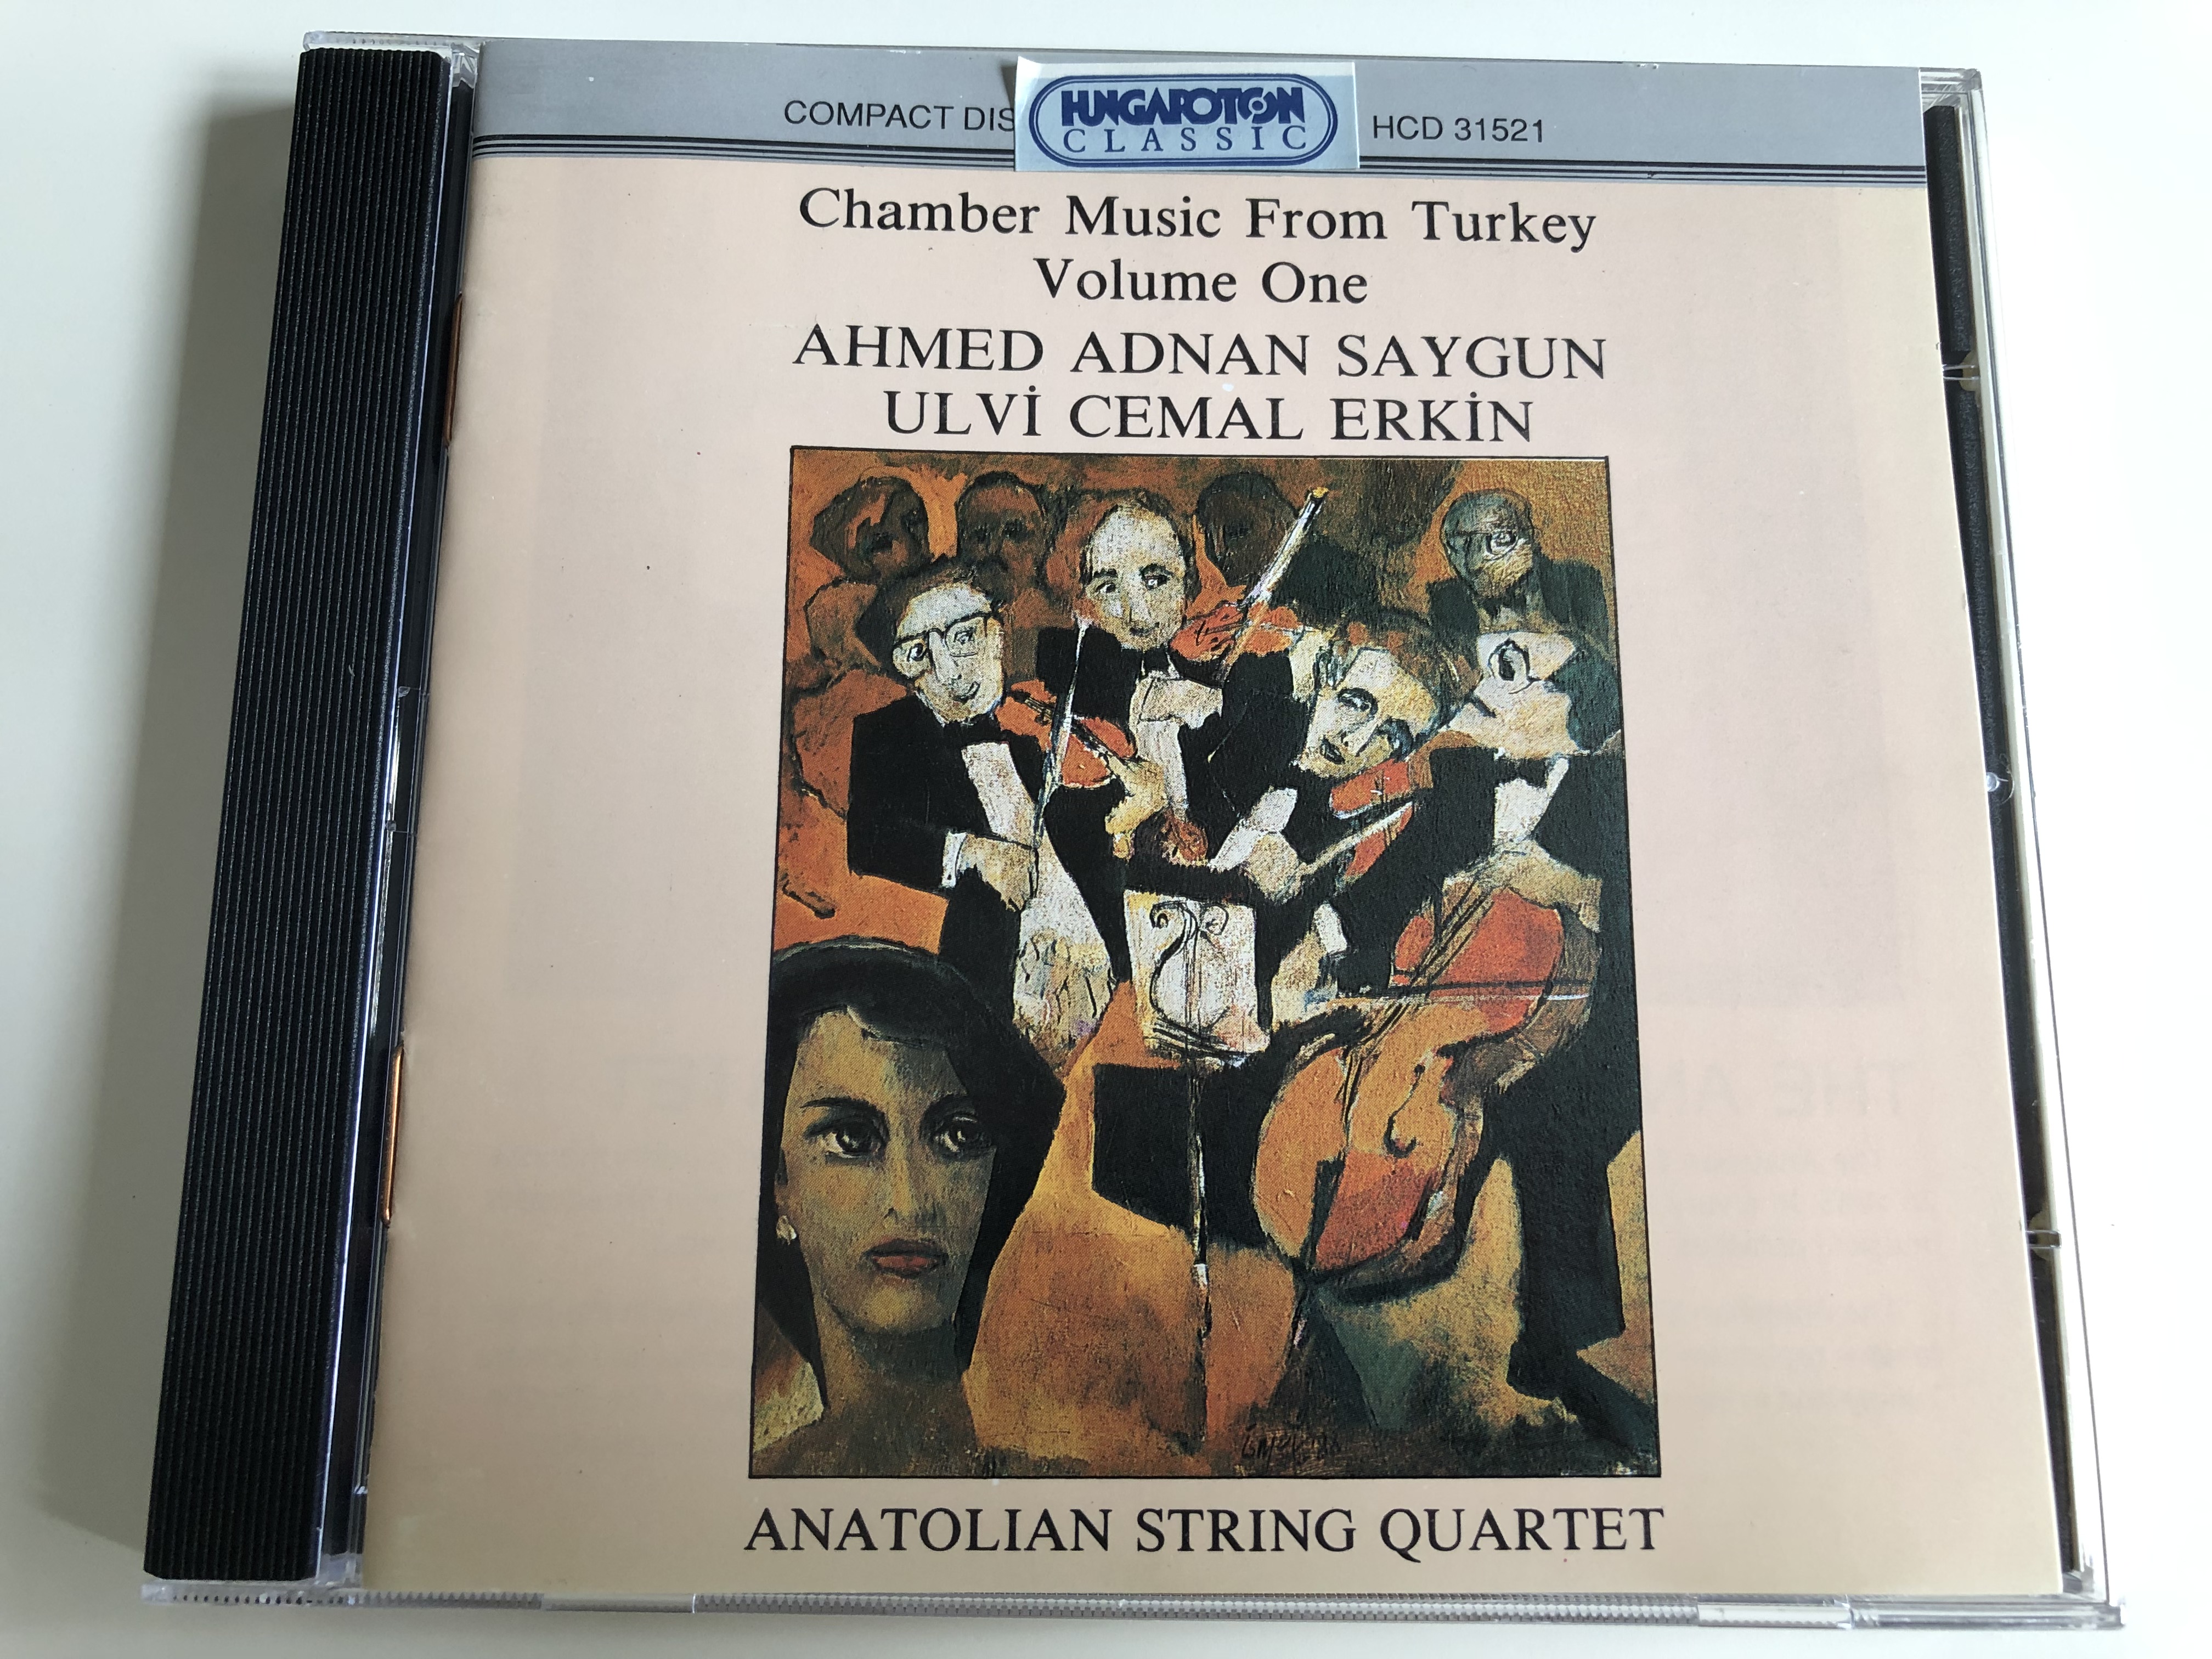 chamber-music-from-turkey-vol.-1-ahmed-adnan-saygun-ulvi-cemal-erkin-anatolian-string-quartet-hungaroton-hcd-31521-audio-cd-1992-1-.jpg